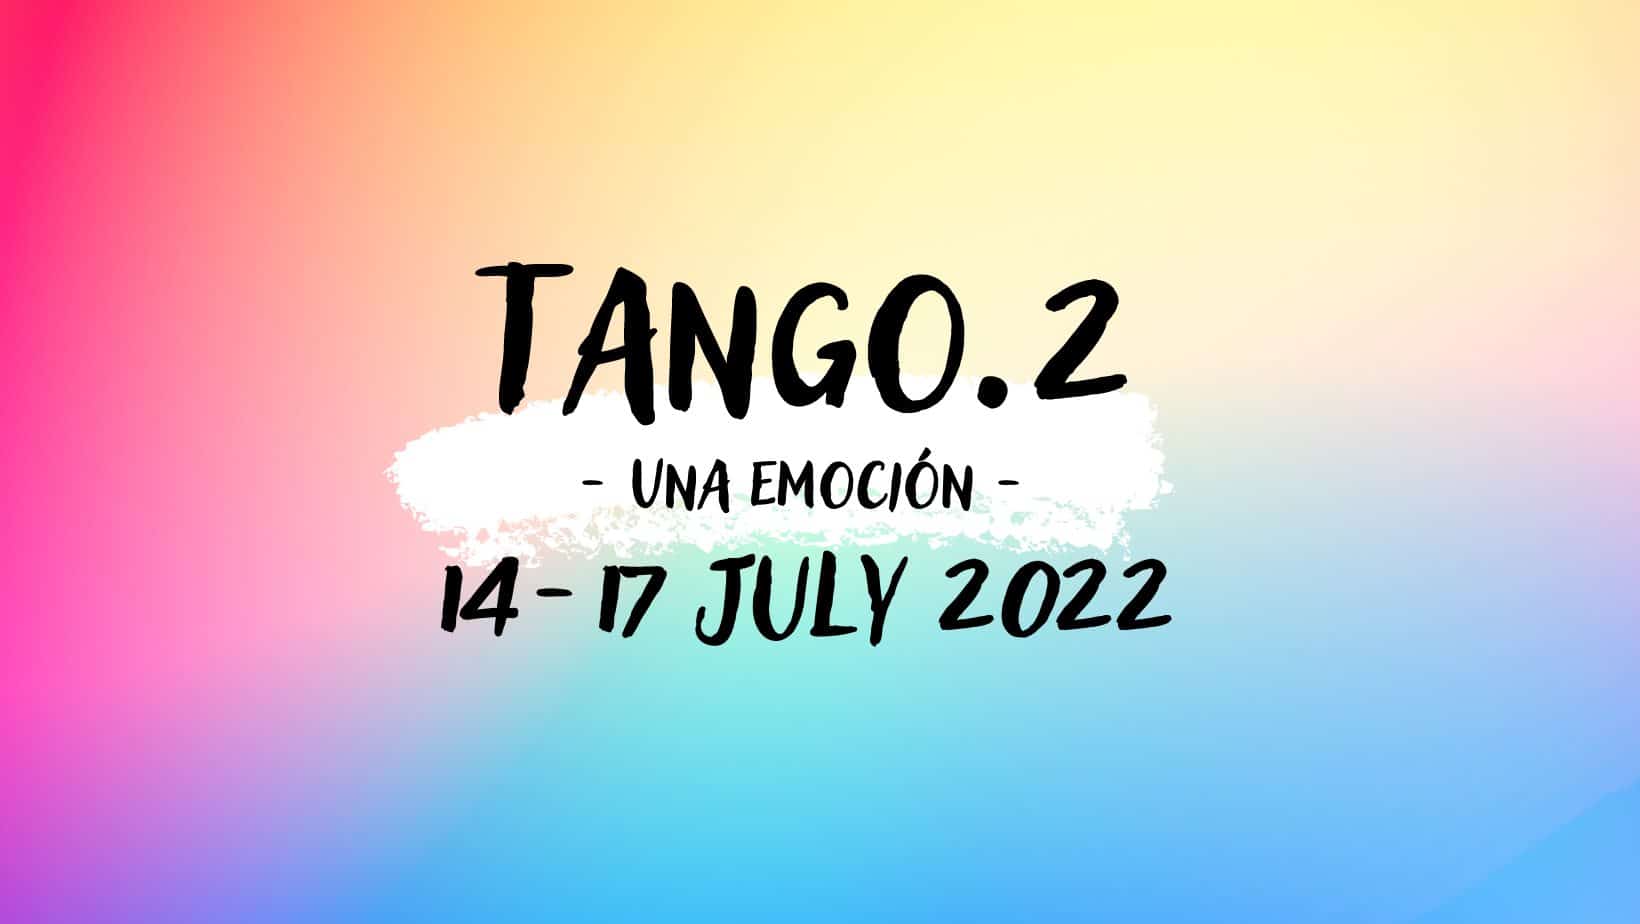 Tango.2 Tango Festival 2022 – Una emoción event picture